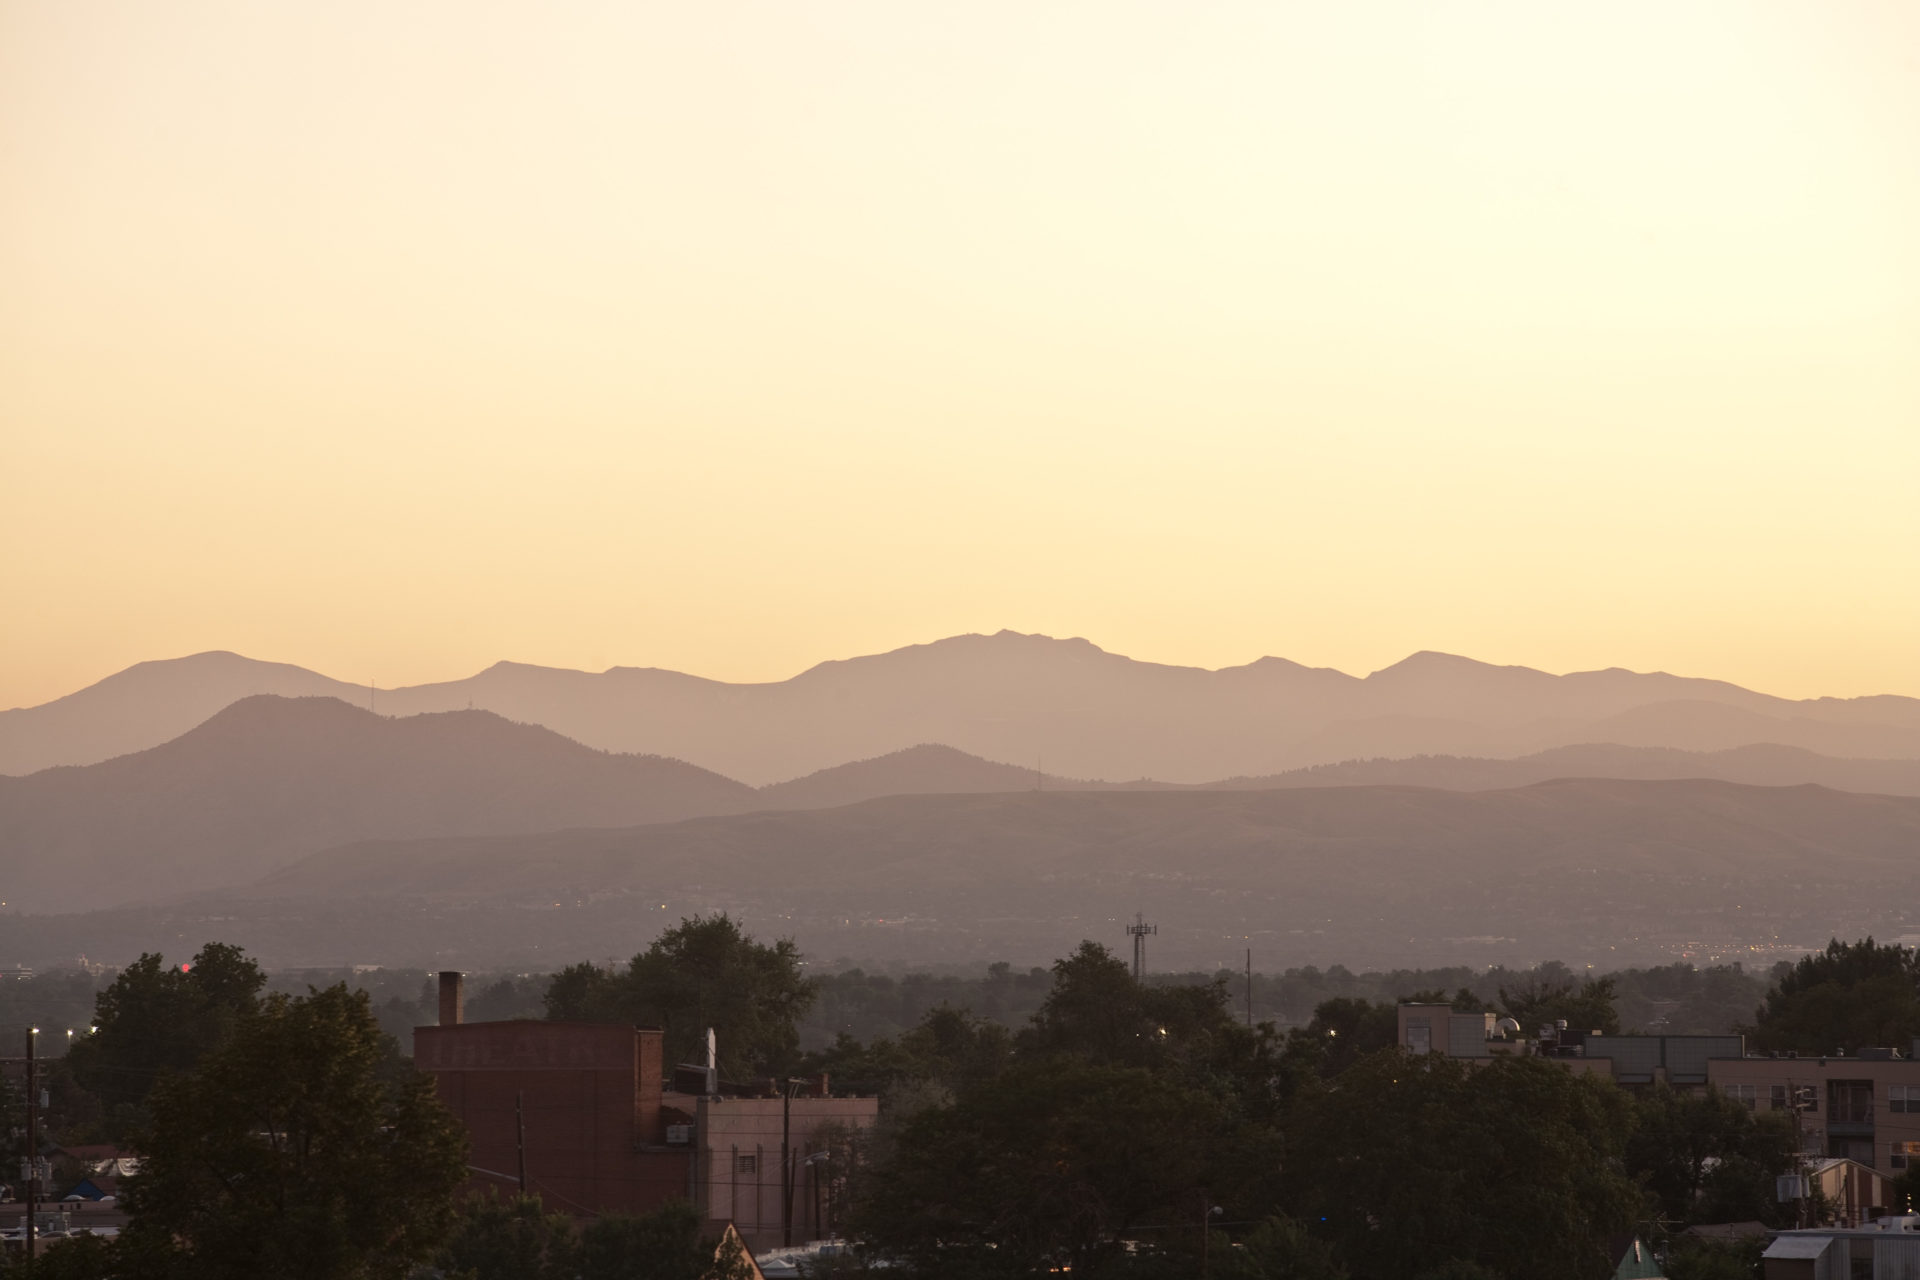 Mount Evans sunset - August 9, 2011